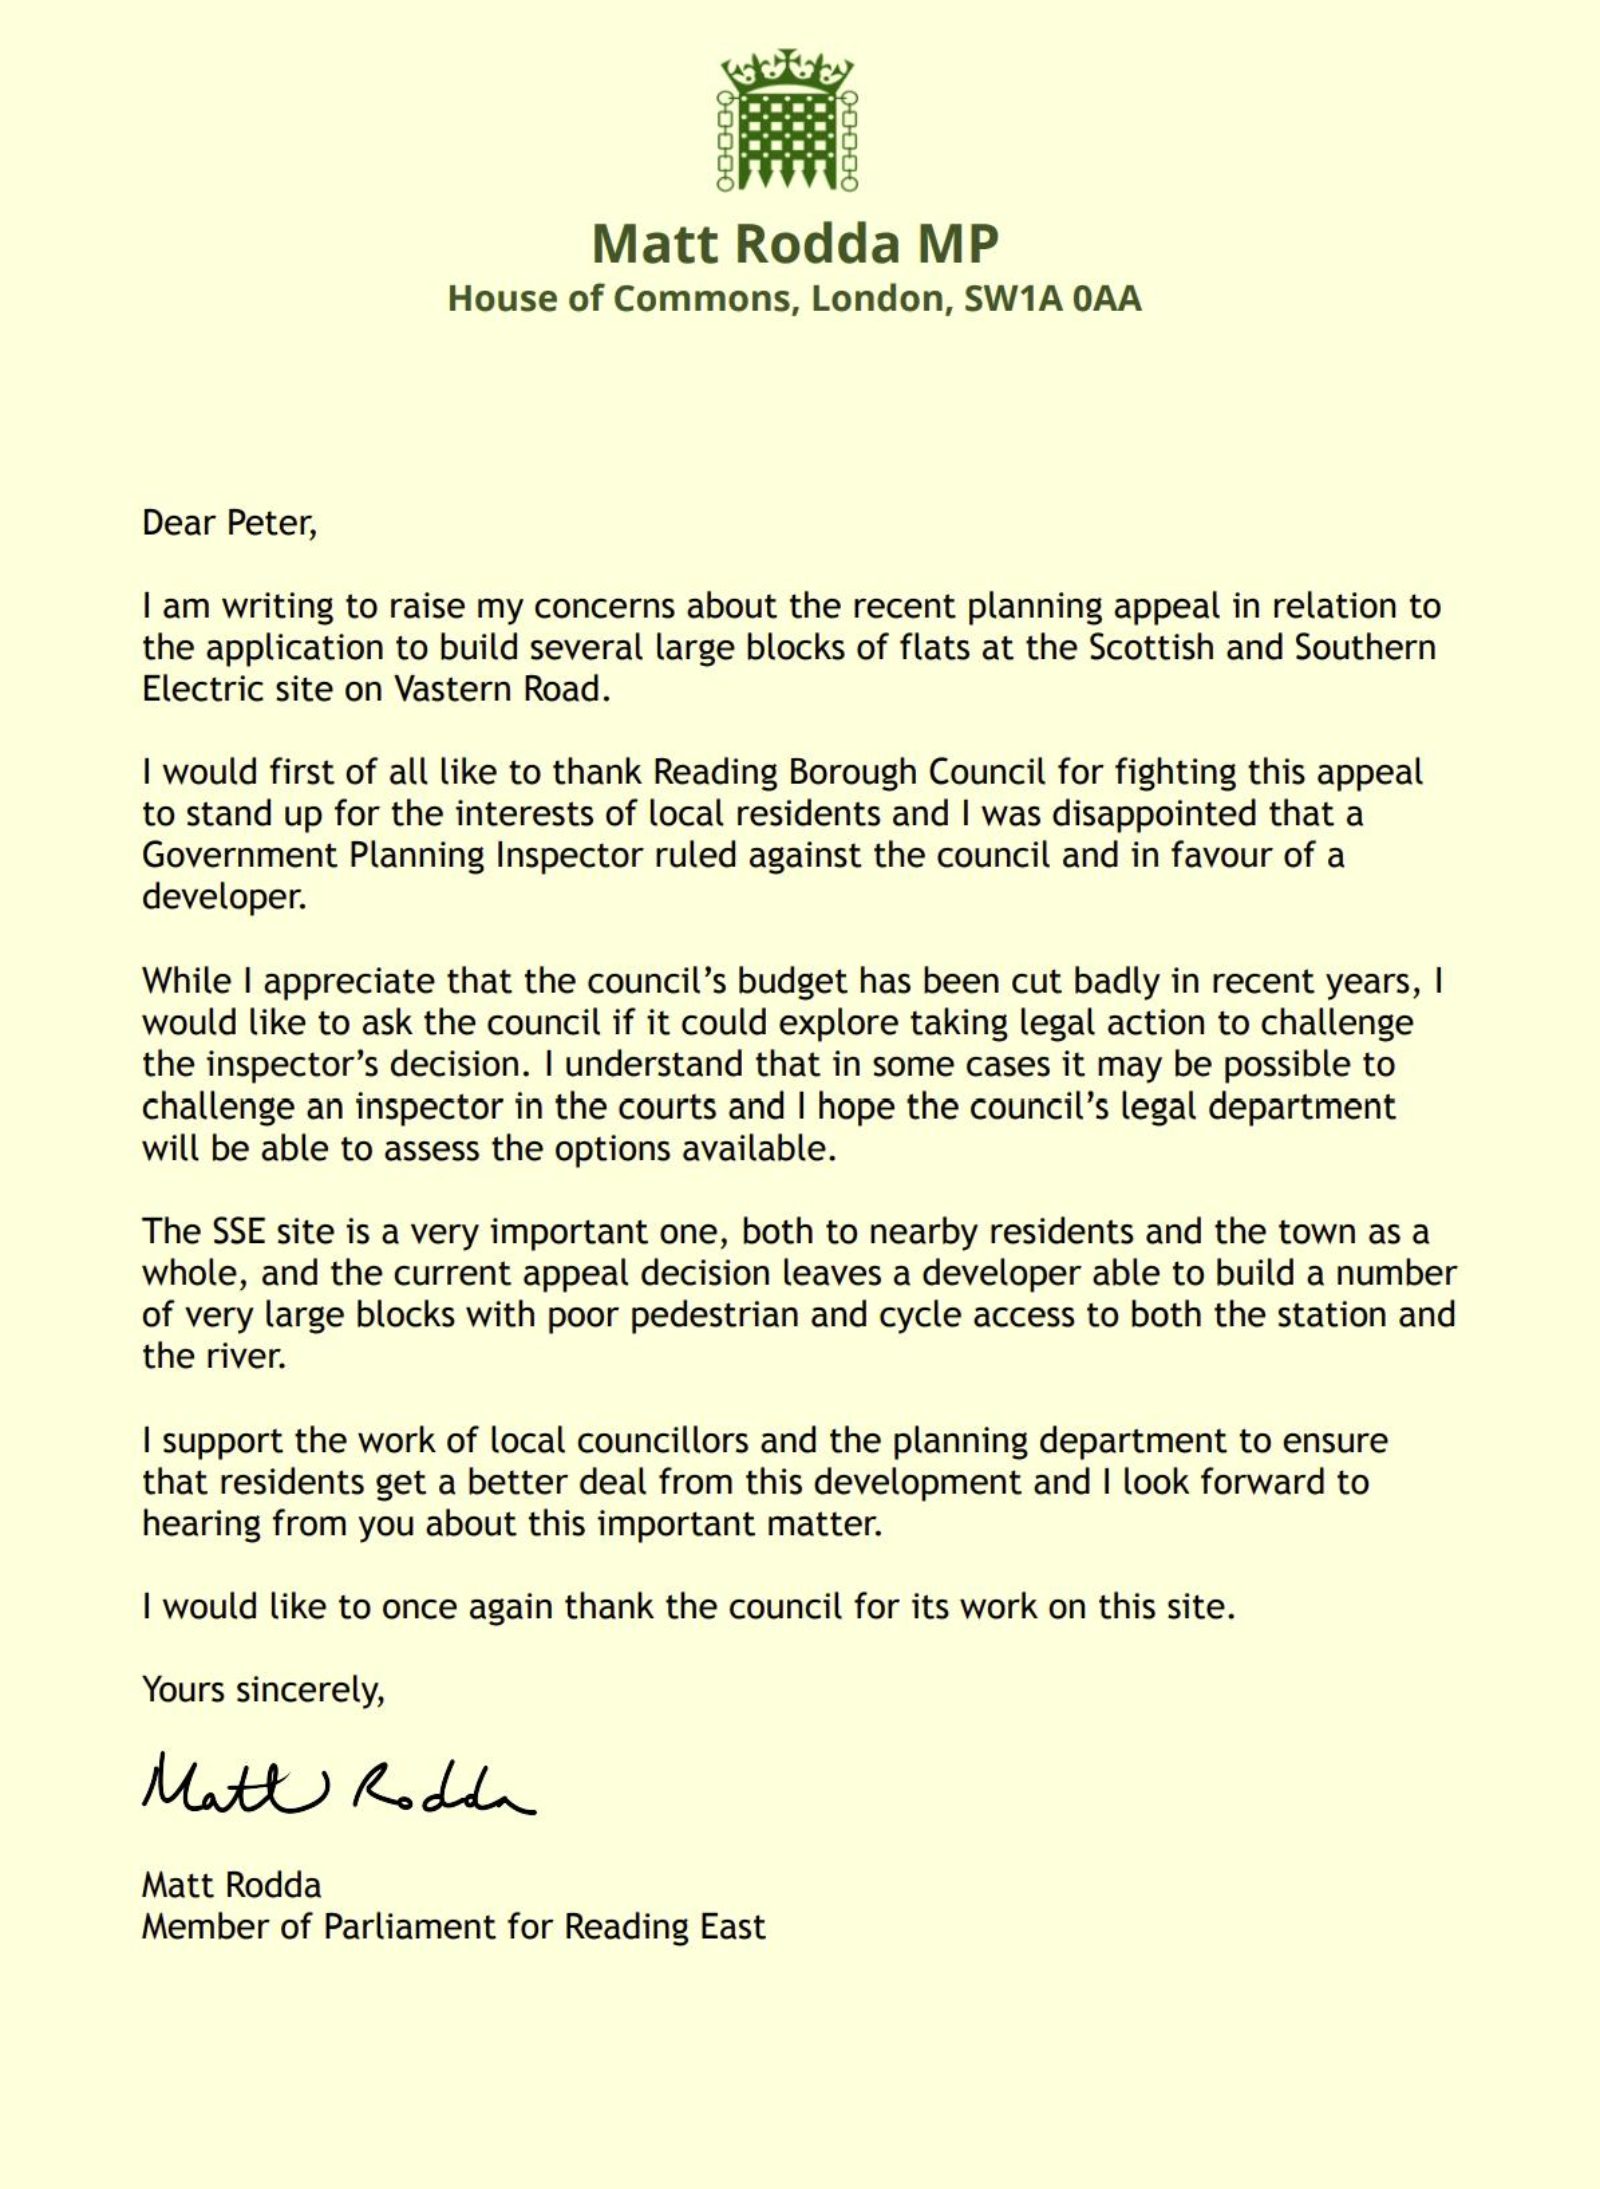 Copy of letter from Matt Rodda MP to Reading Borough Council